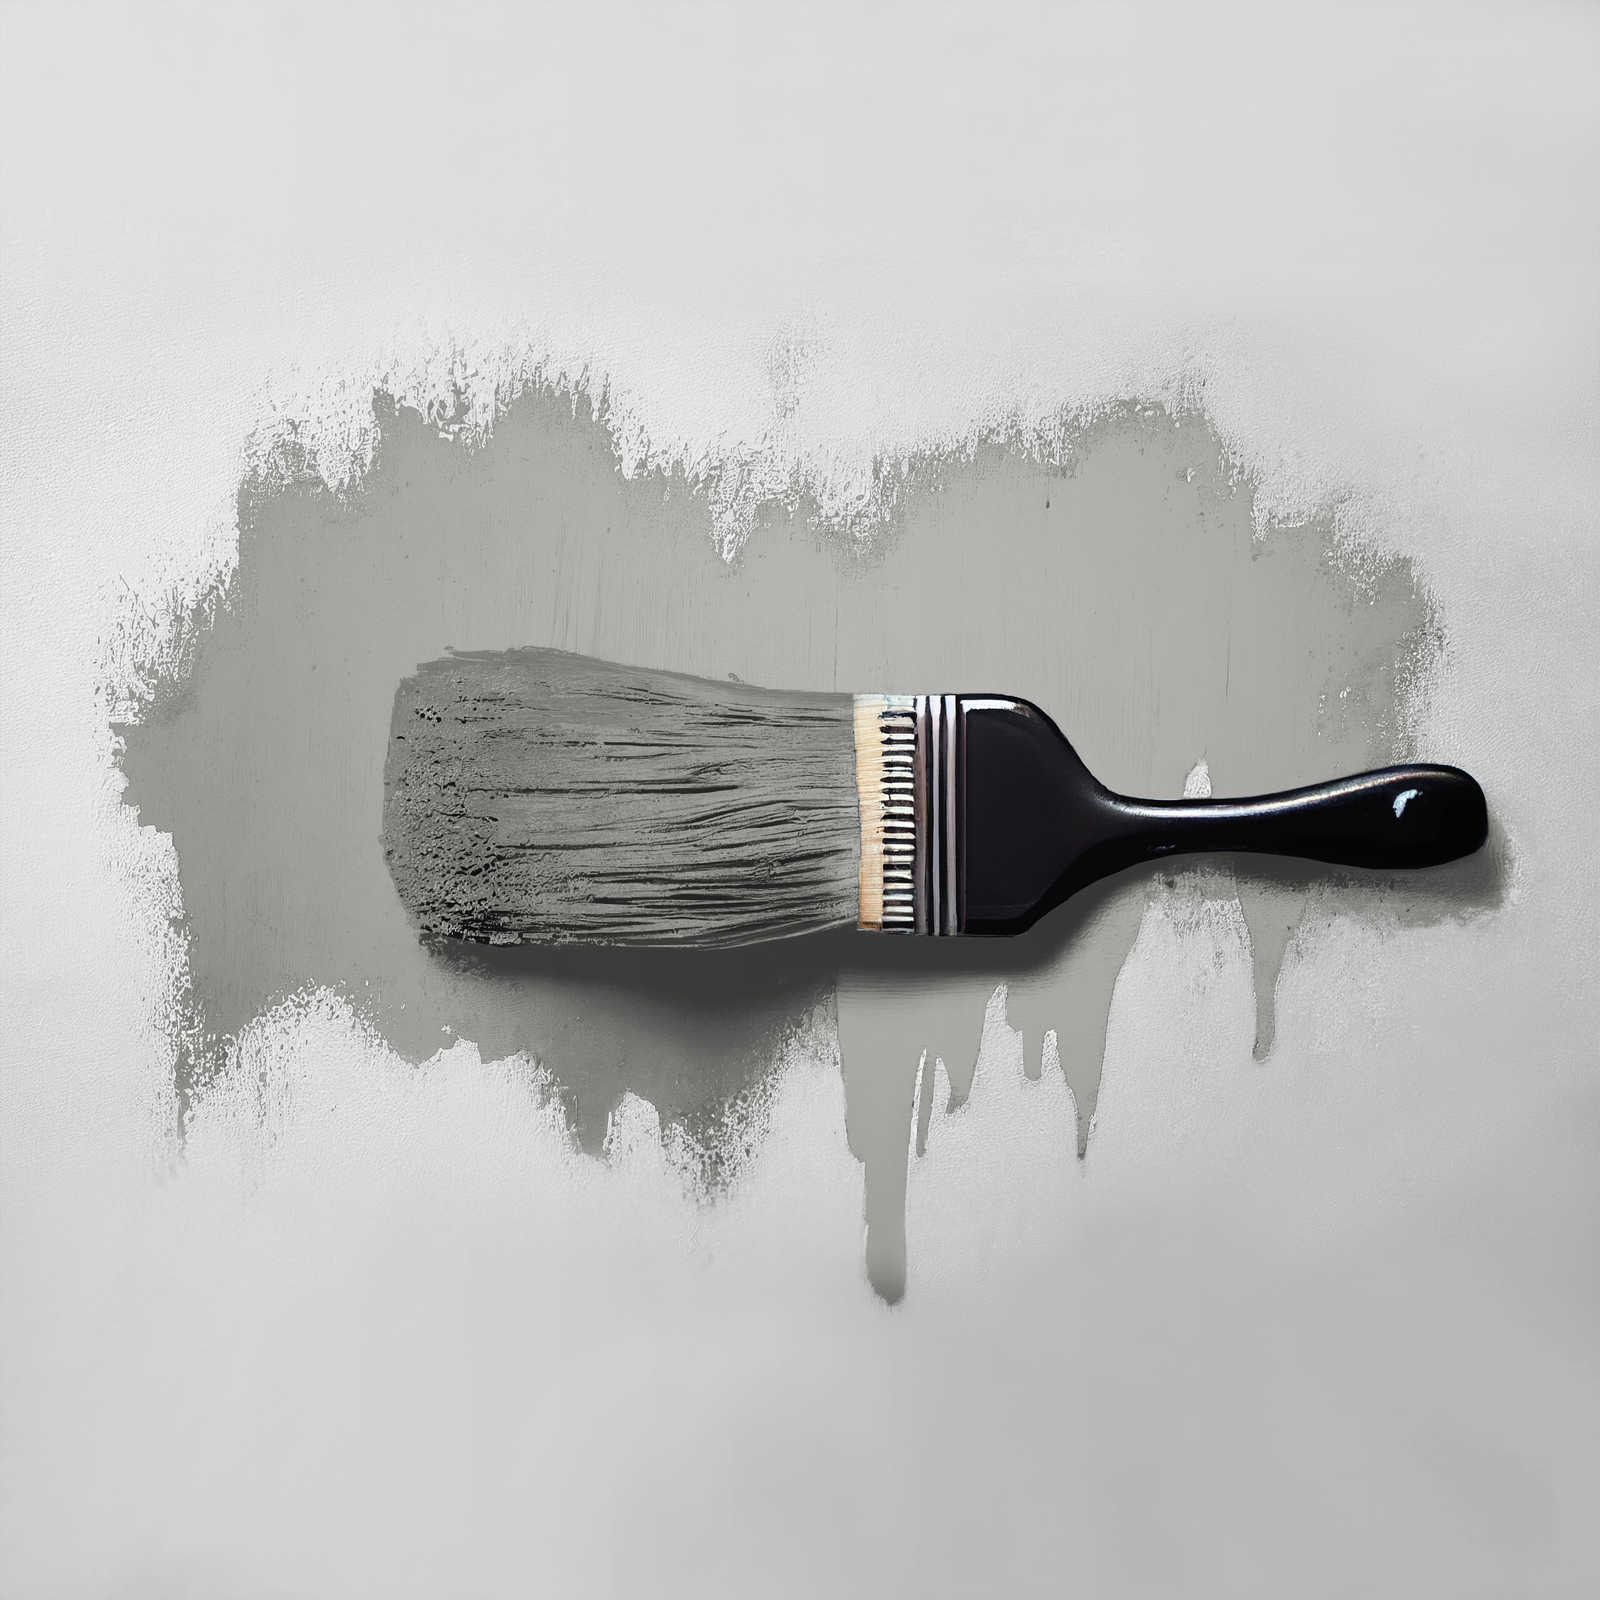             Pintura mural TCK1010 »Grey Salt« en gris neutro – 2,5 litro
        